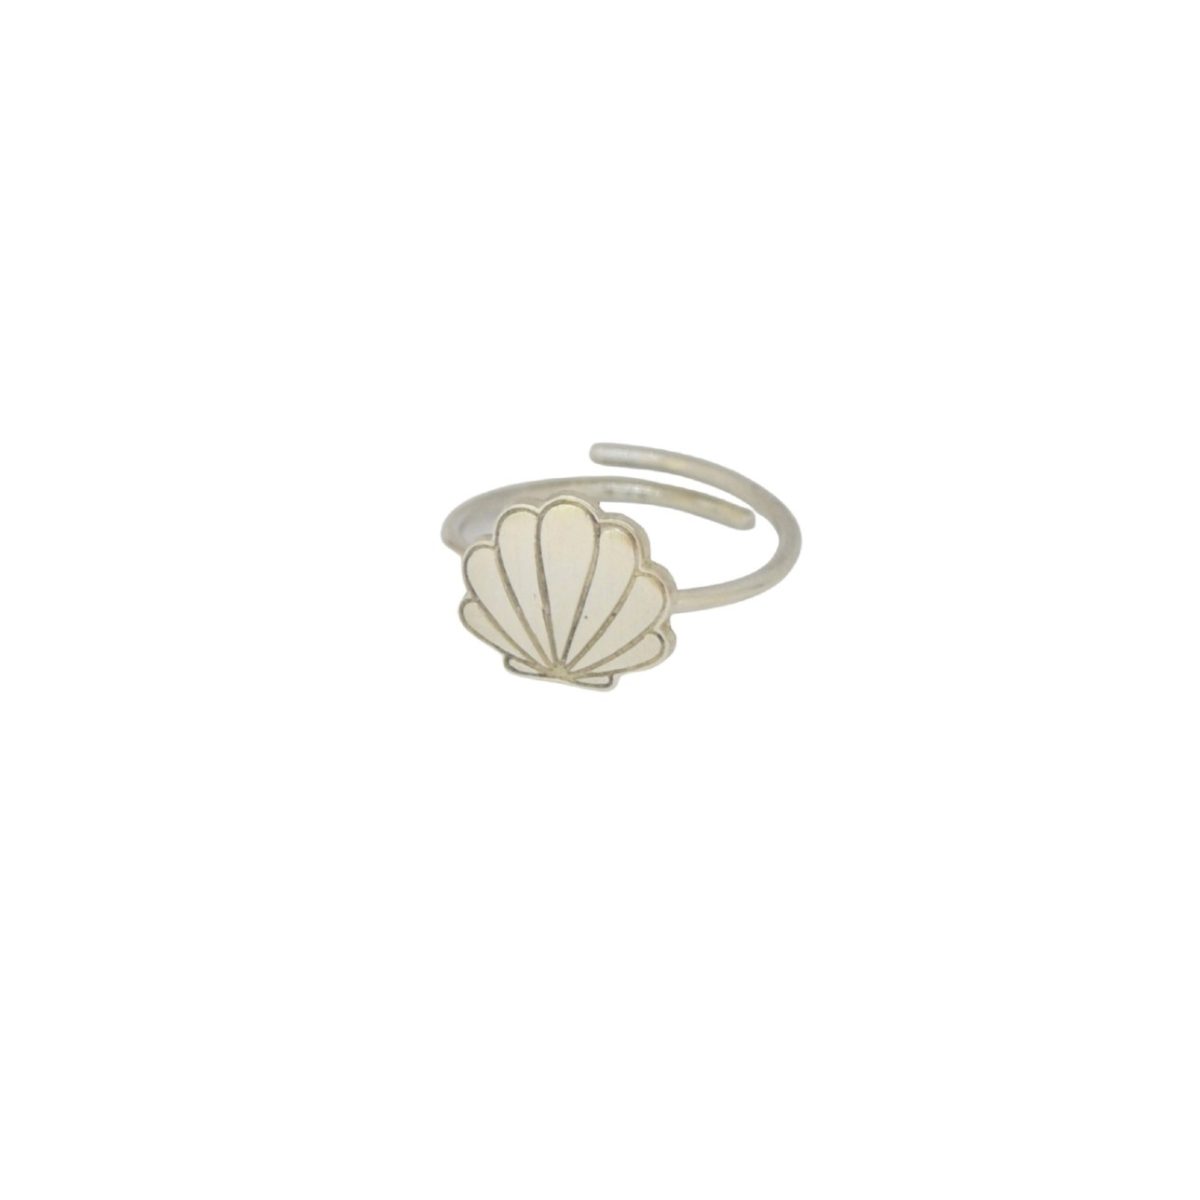 “Seashell” ασημένιο δαχτυλίδι “Seashell” ασημένιο δαχτυλίδι “Seashell” ασημένιο δαχτυλίδι 5